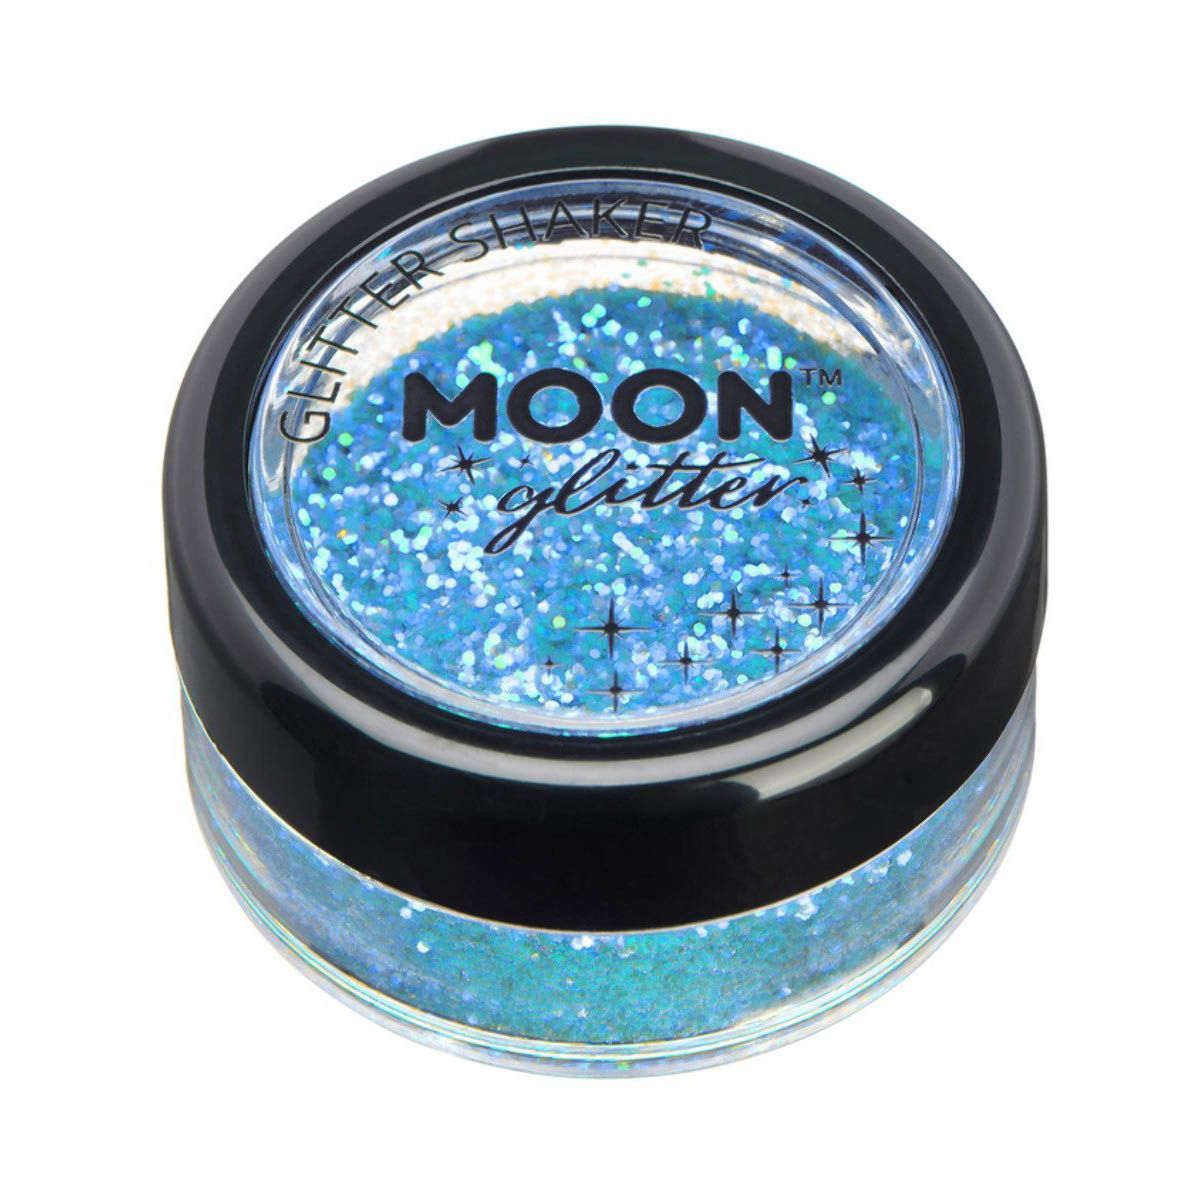 Moon glitter i burk shaker, finkornigt iriserande 5g Blå